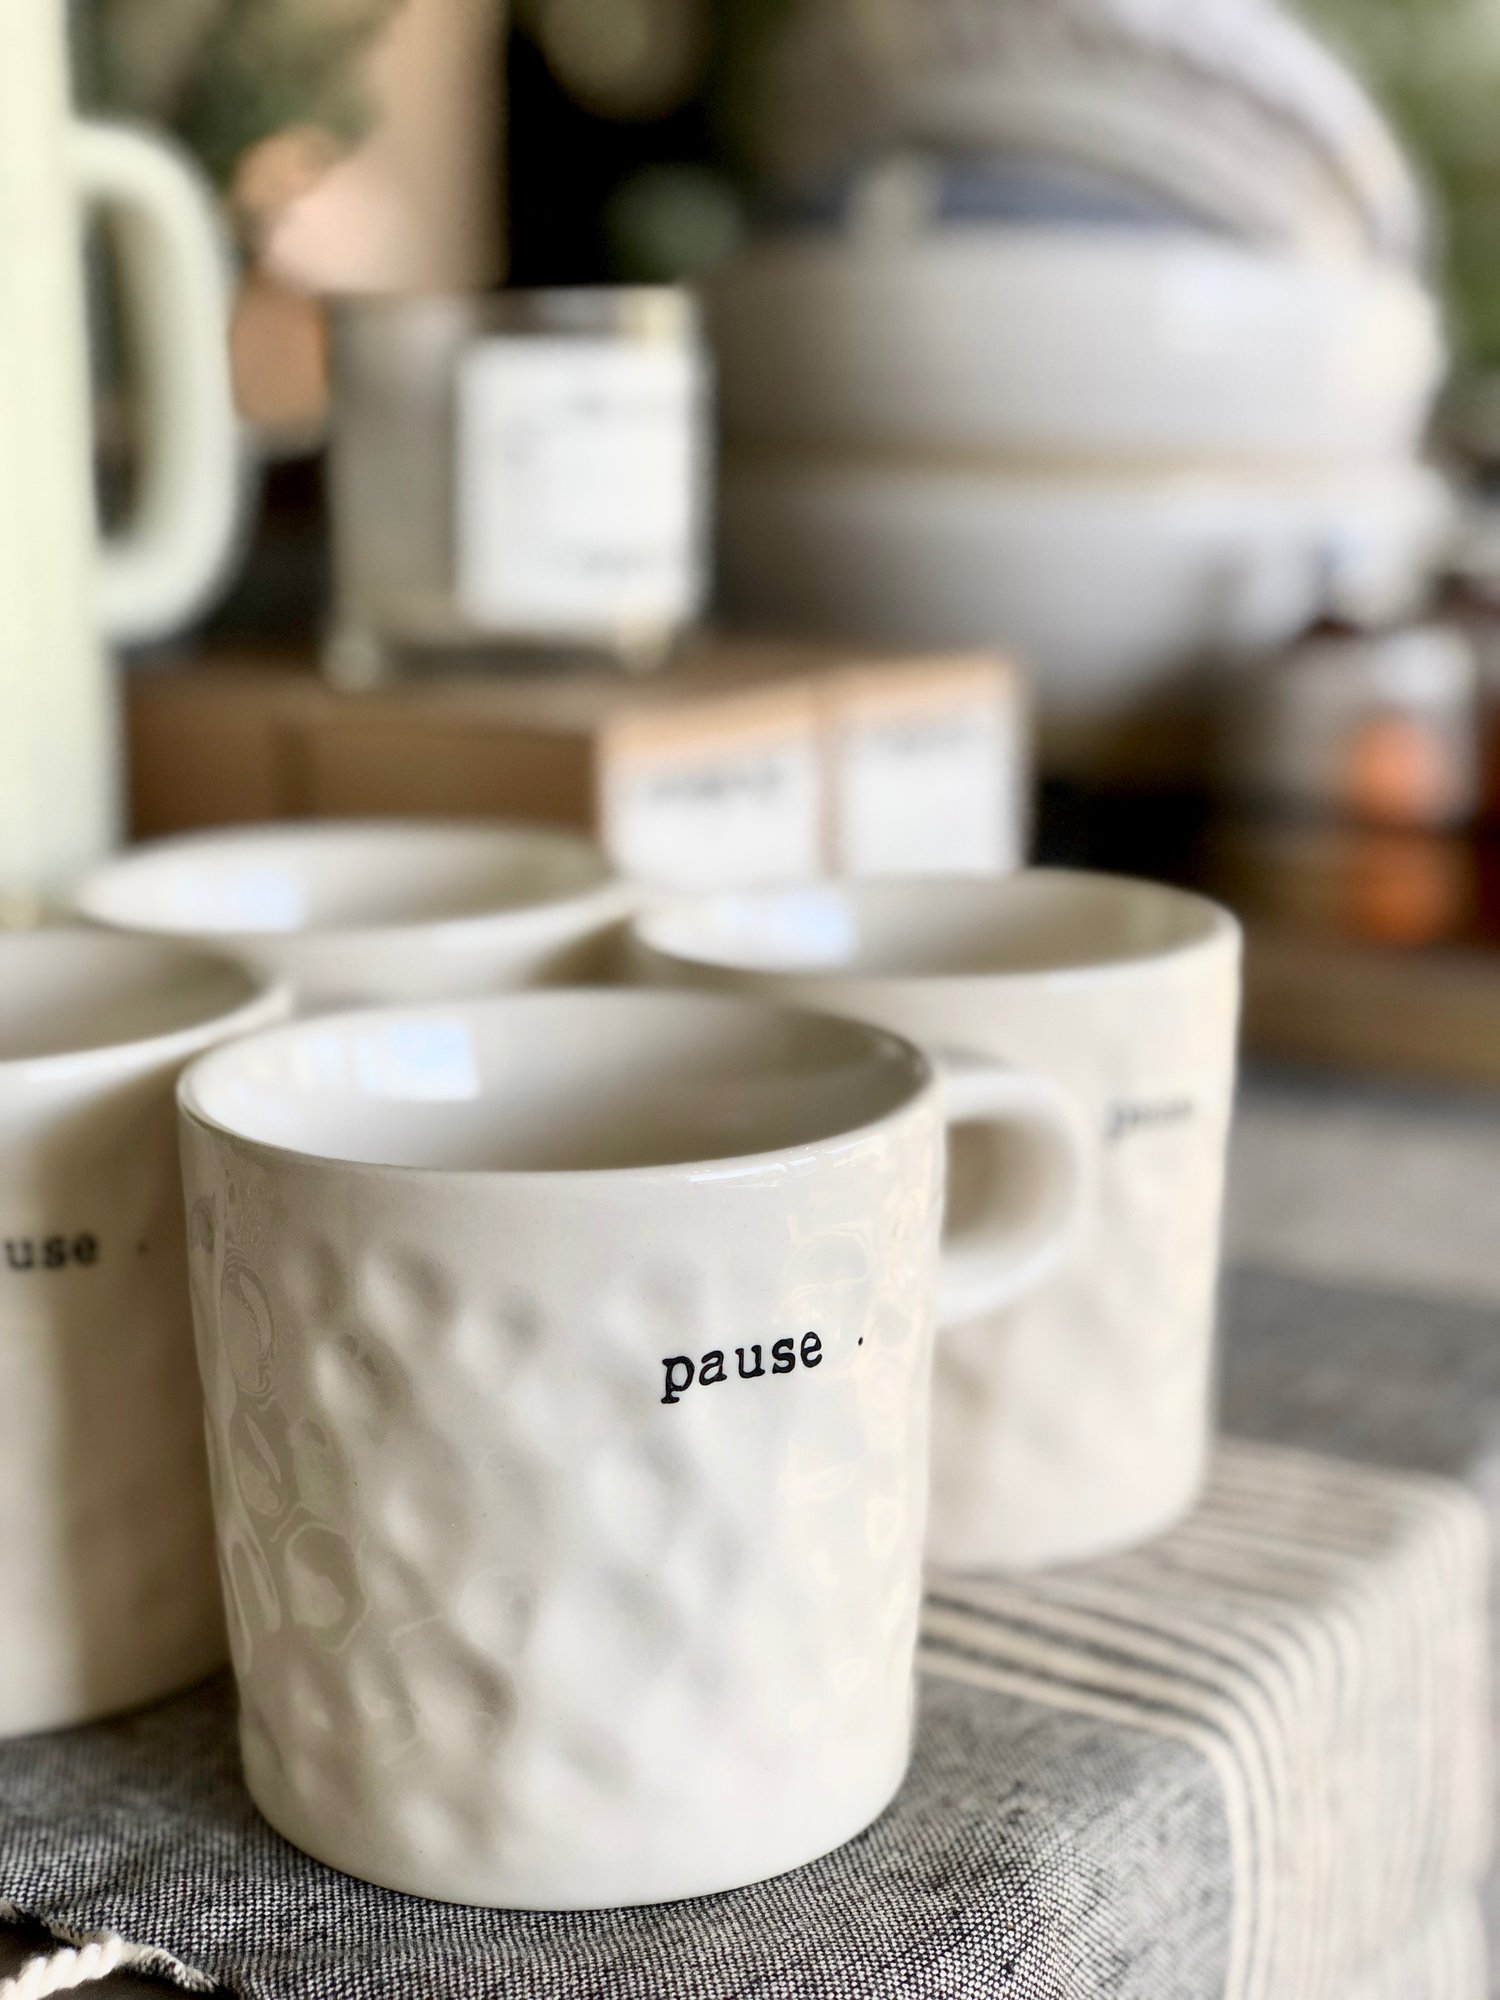  "Pause" Mug {$12.00} 